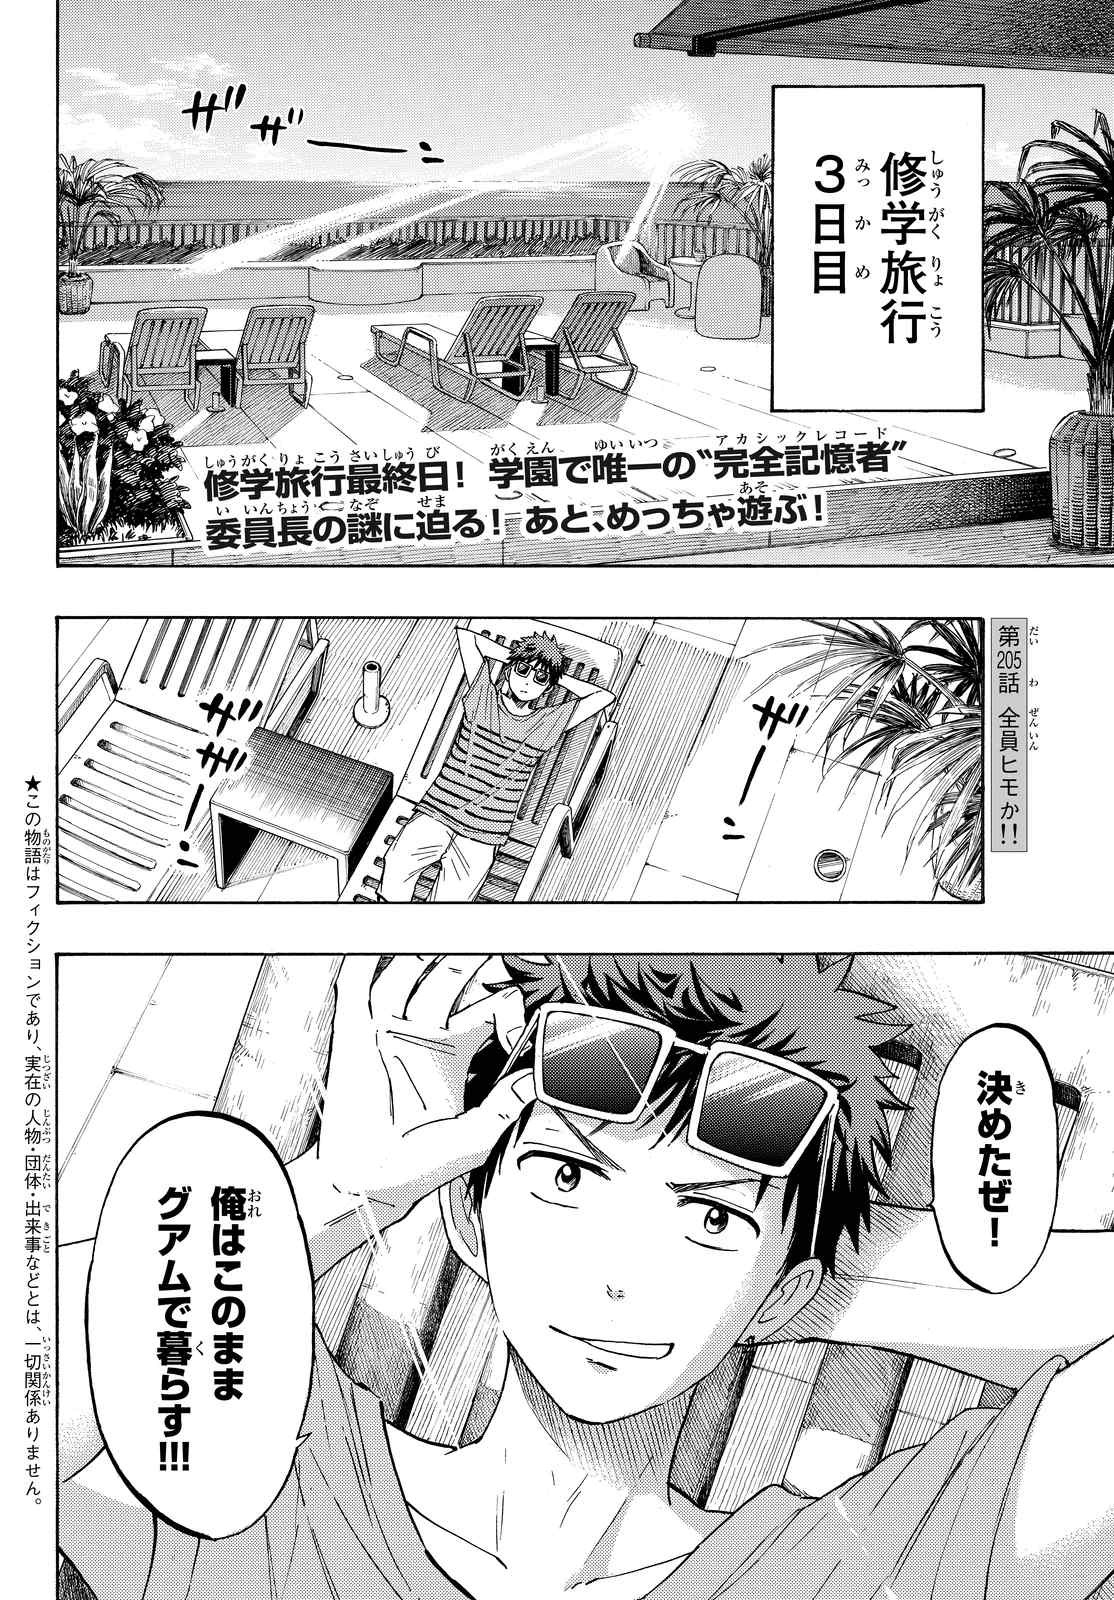 Yamada-kun to 7-nin no Majo - Chapter 205 - Page 2